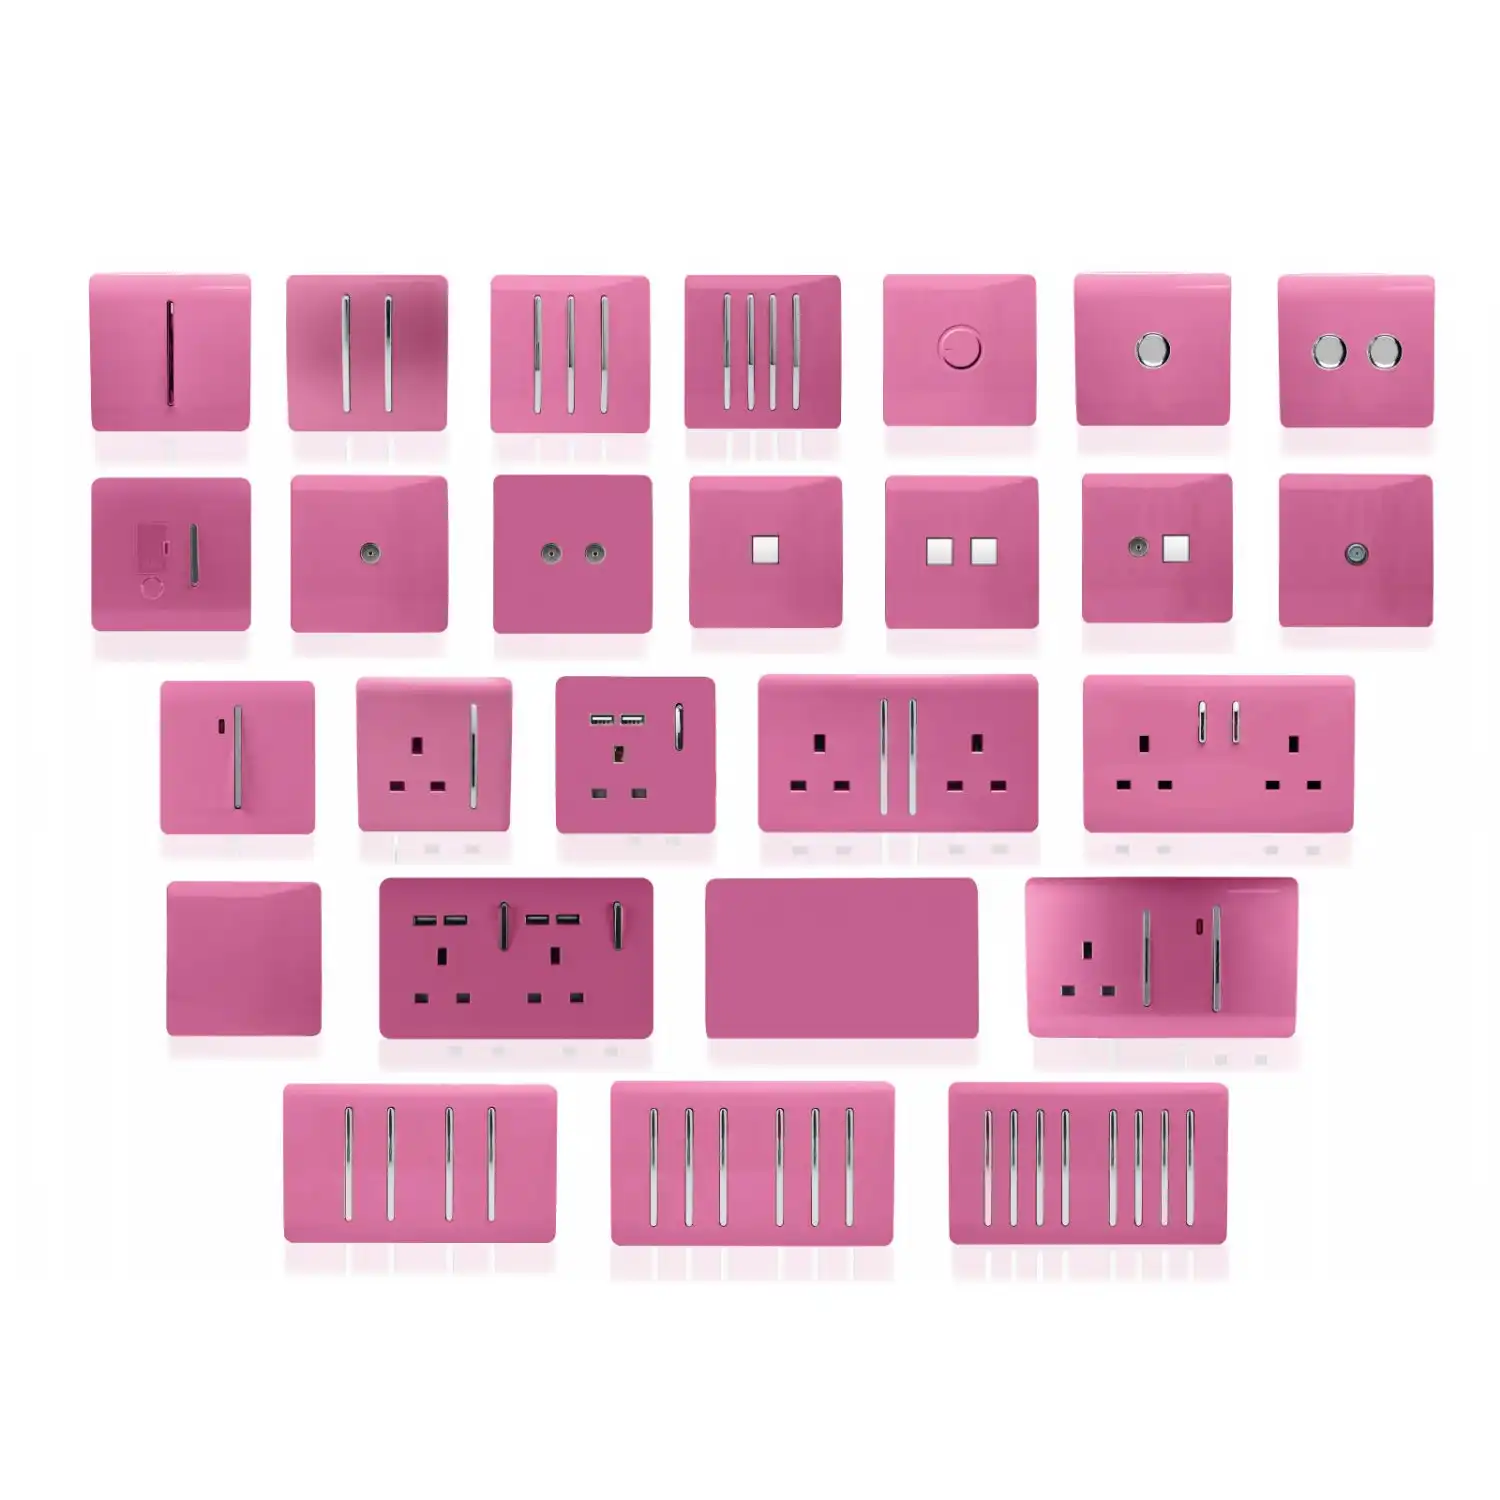 Trendi, Artistic Modern 2 Gang Doorbell Pink Finish, BRITISH MADE, (25mm Back Box Required), 5yrs Warranty